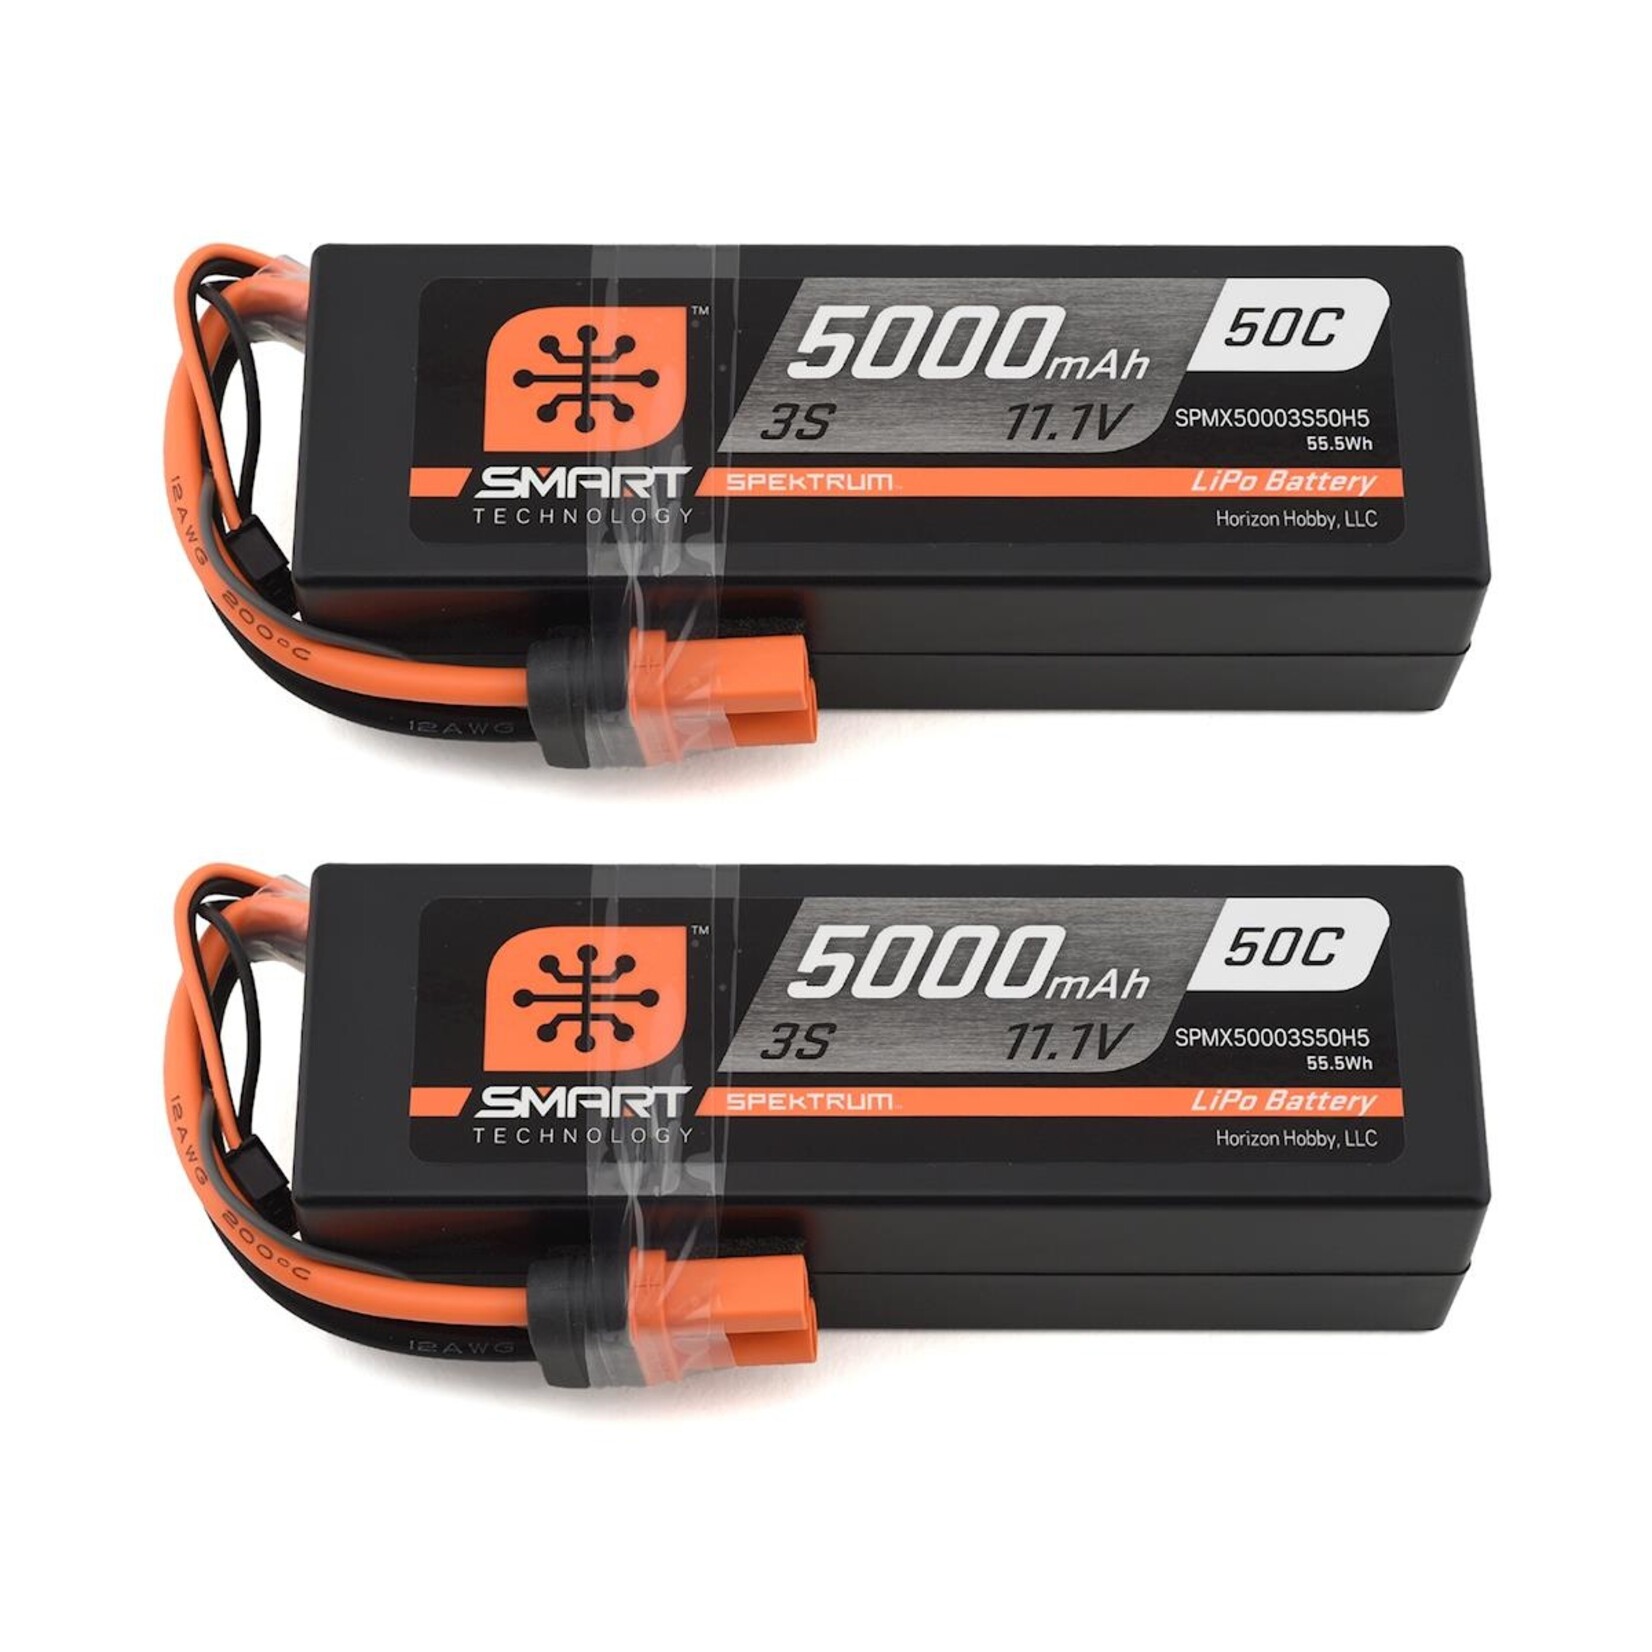 Spektrum Spektrum RC Smart PowerStage 6S Bundle w/Two 3S Smart LiPo Batteries (5000mAh) #SPMXPS6